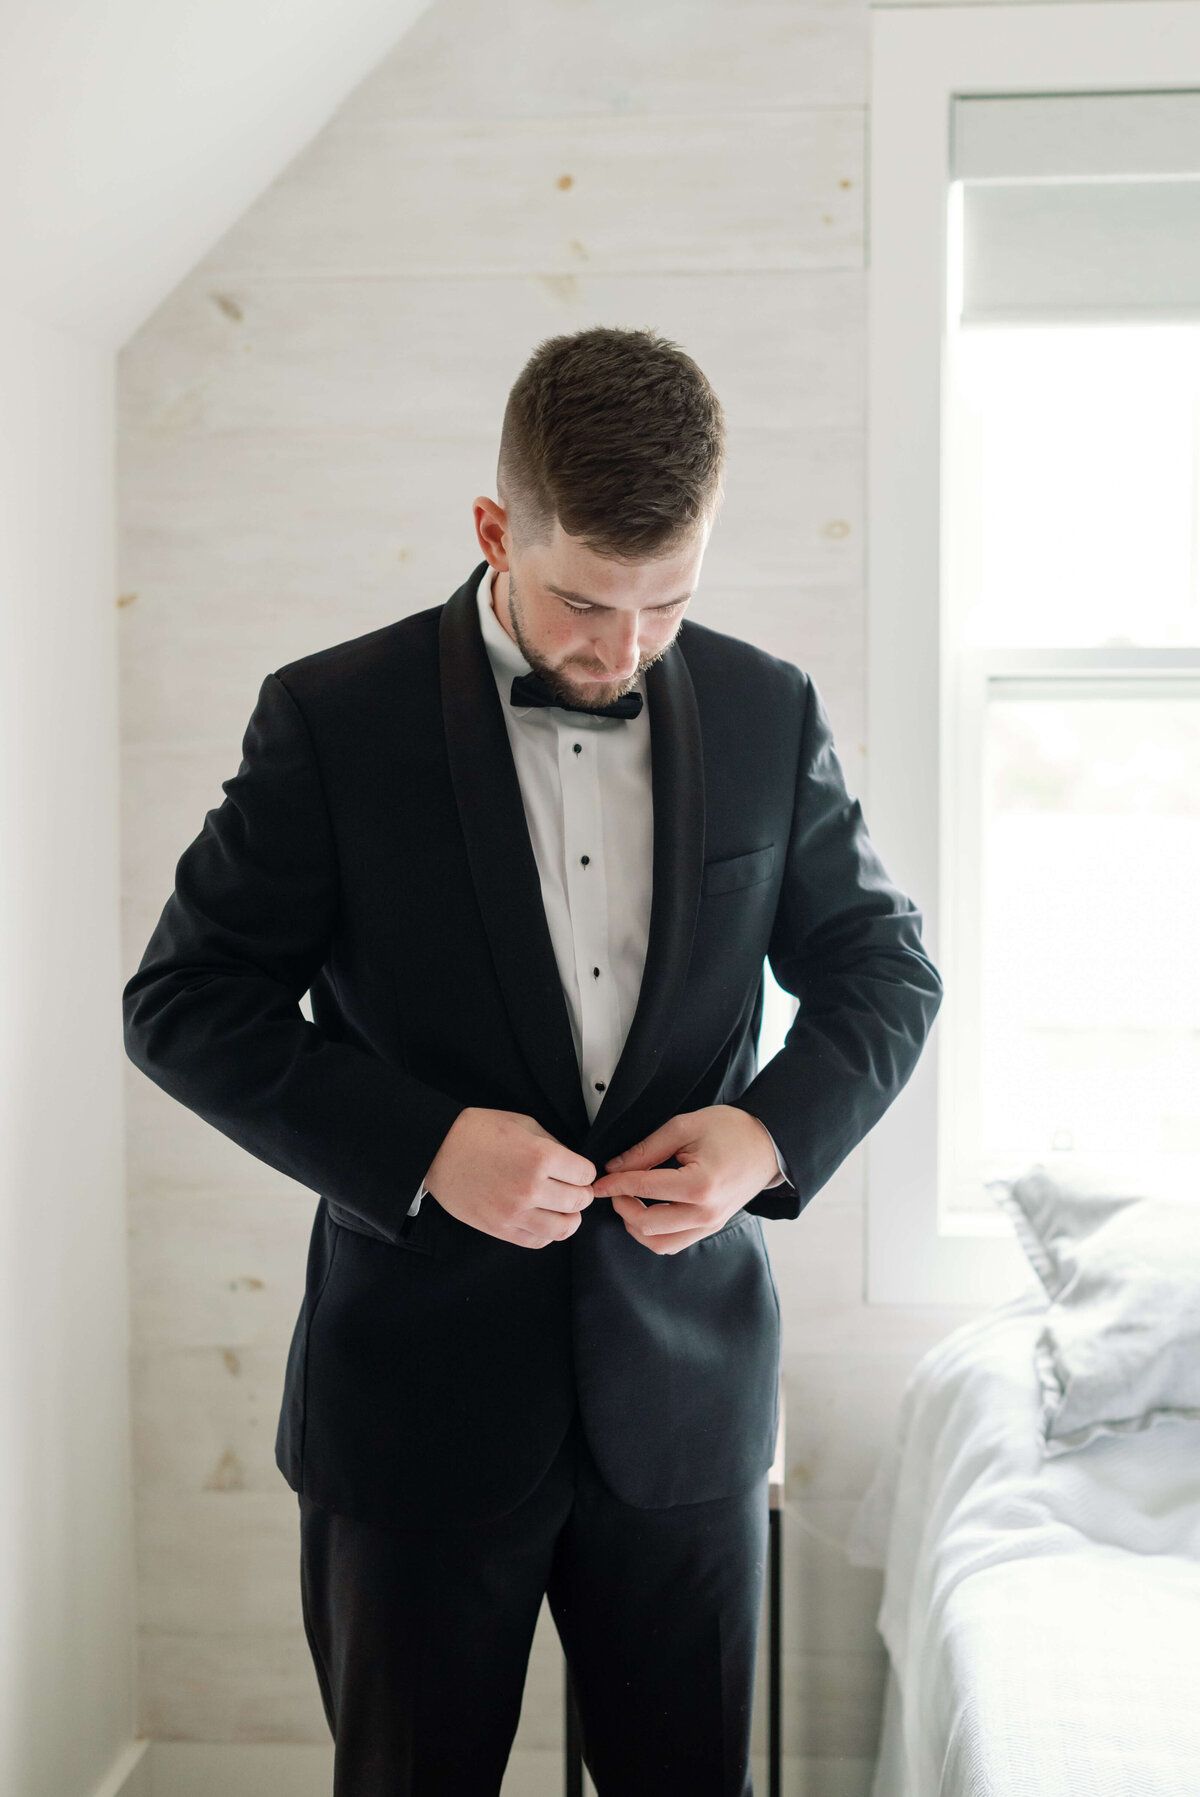 Groom buttoning up suit ahead of wedding at  Pier21 in Halifax, Nova Scotia